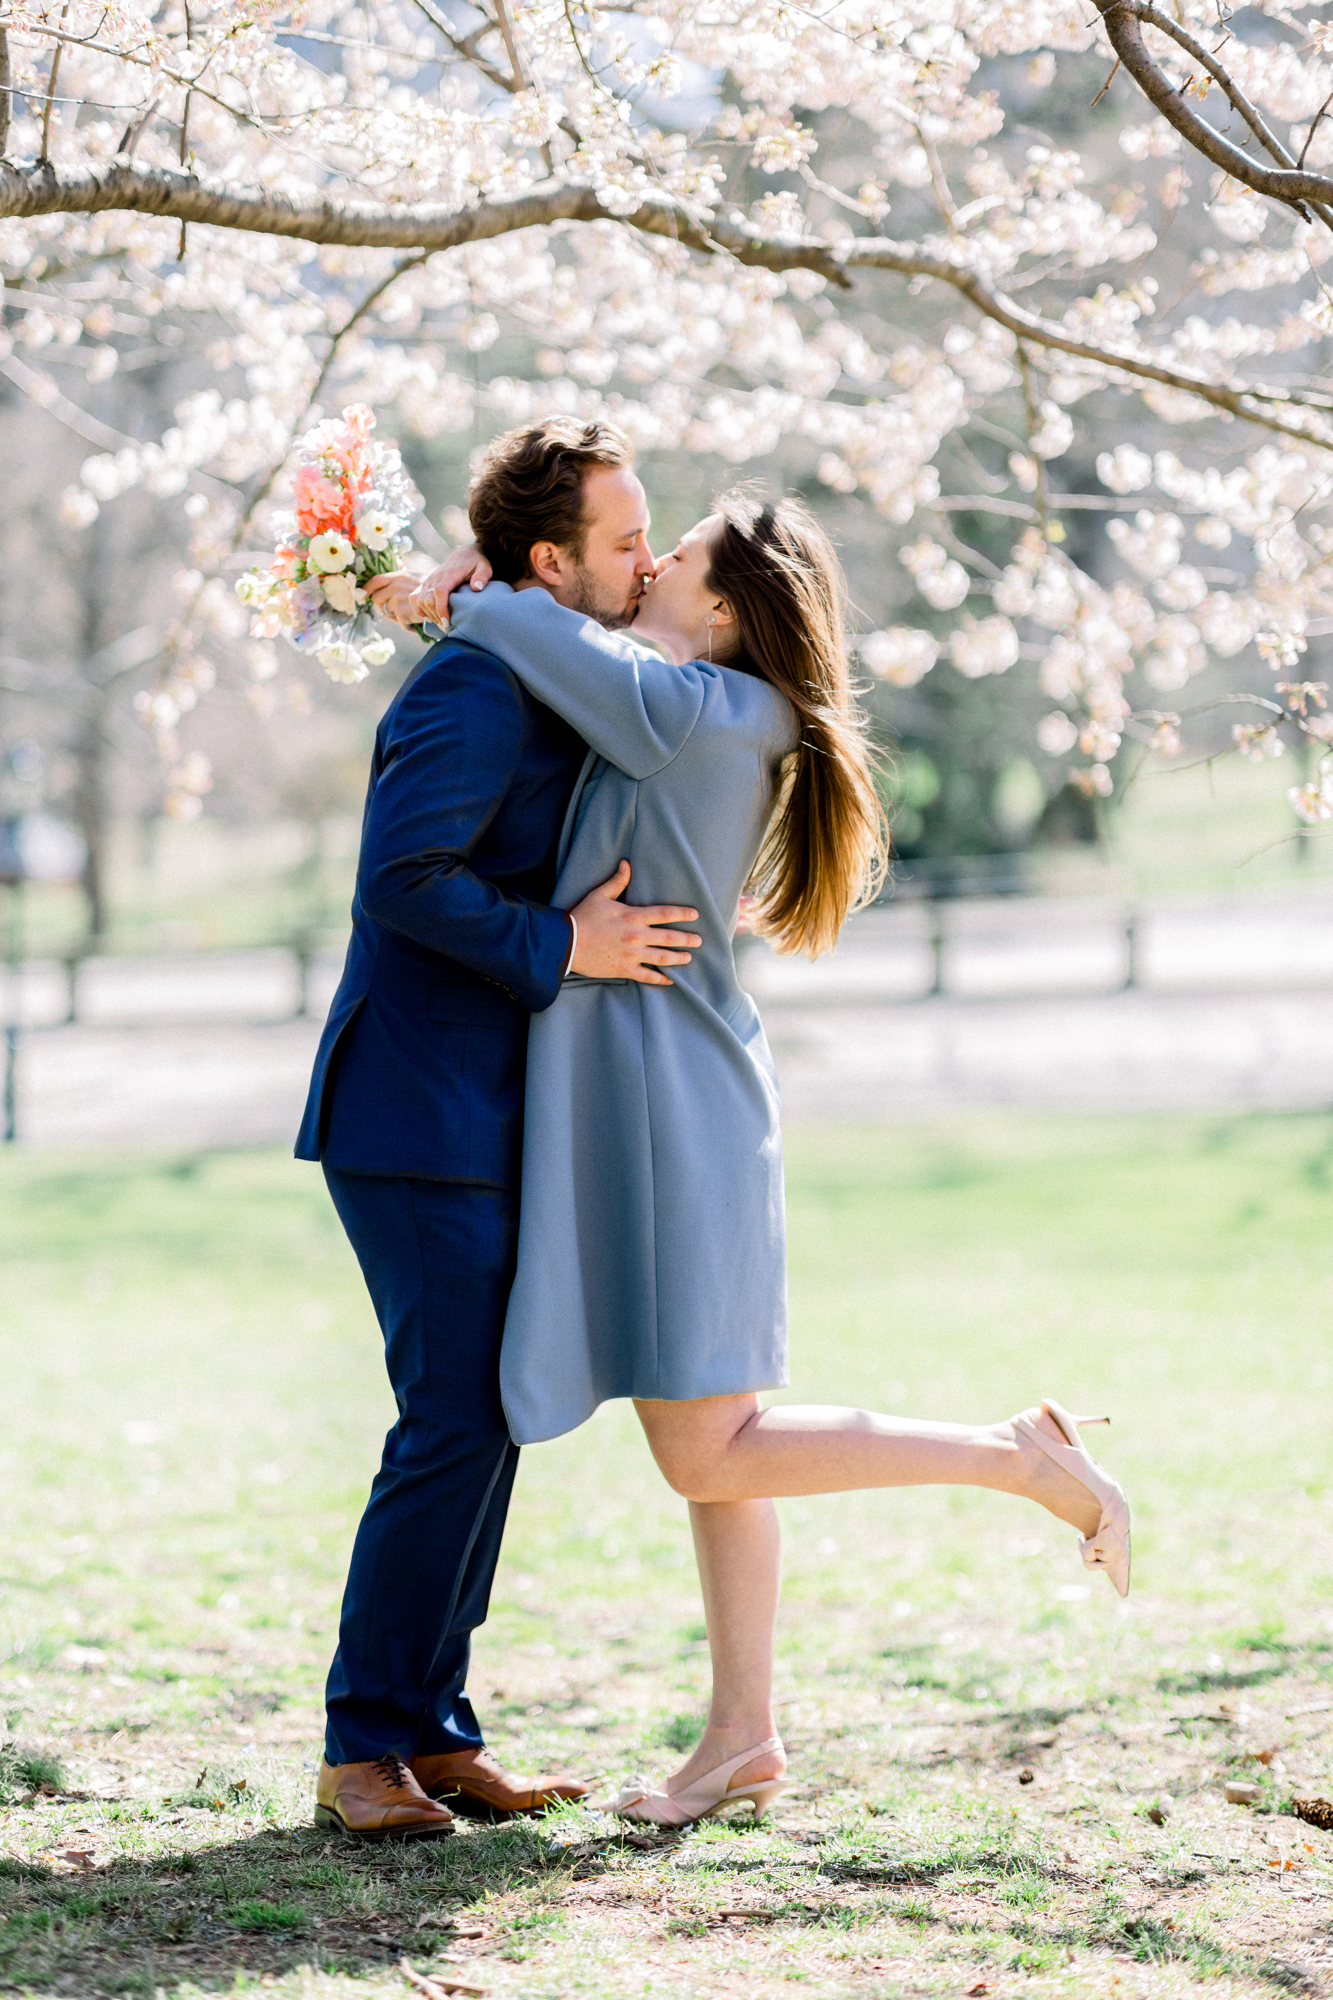 Romantic Bow Bridge Wedding Photos Among Central Park's Spring Cherry Blossoms